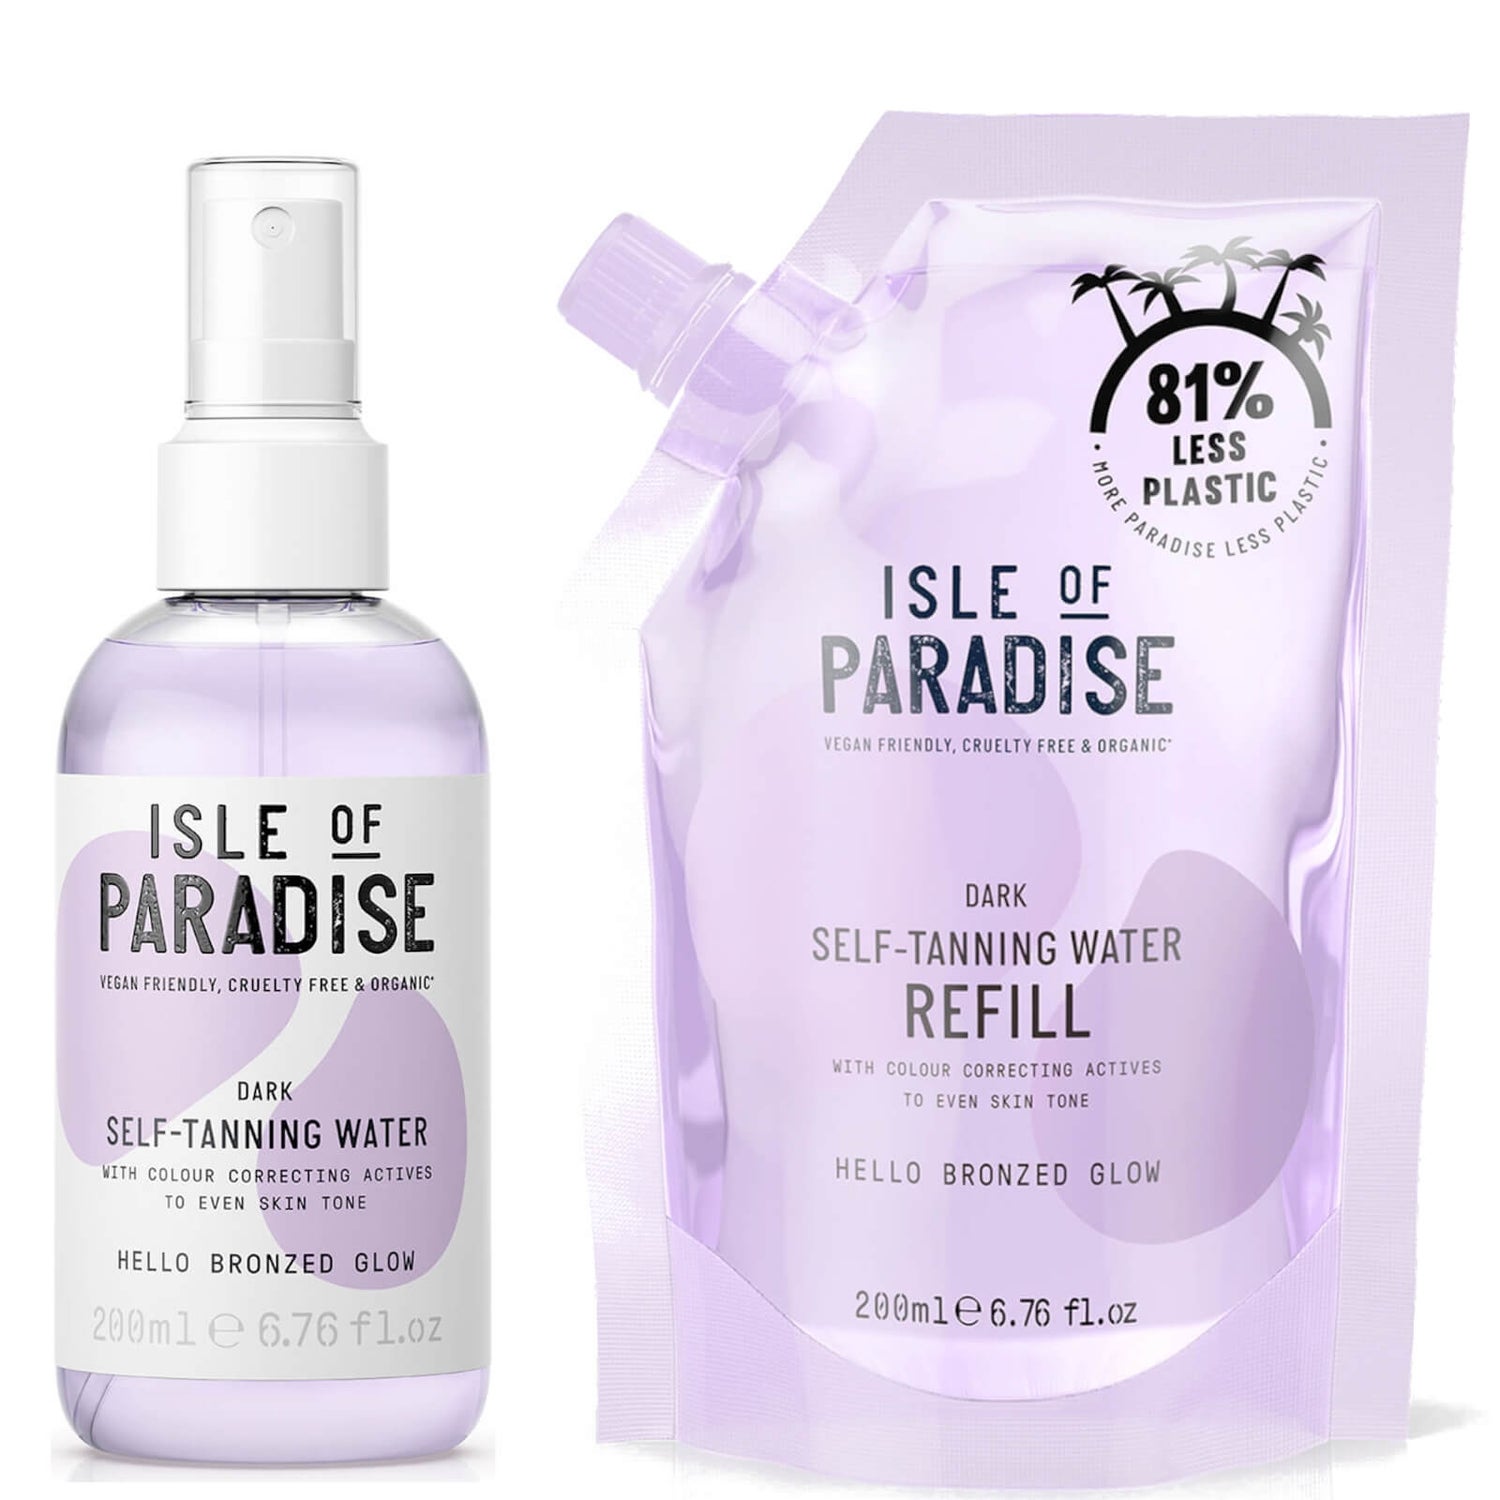 Isle of Paradise Dark Self-Tanning Water and Refill Bundle